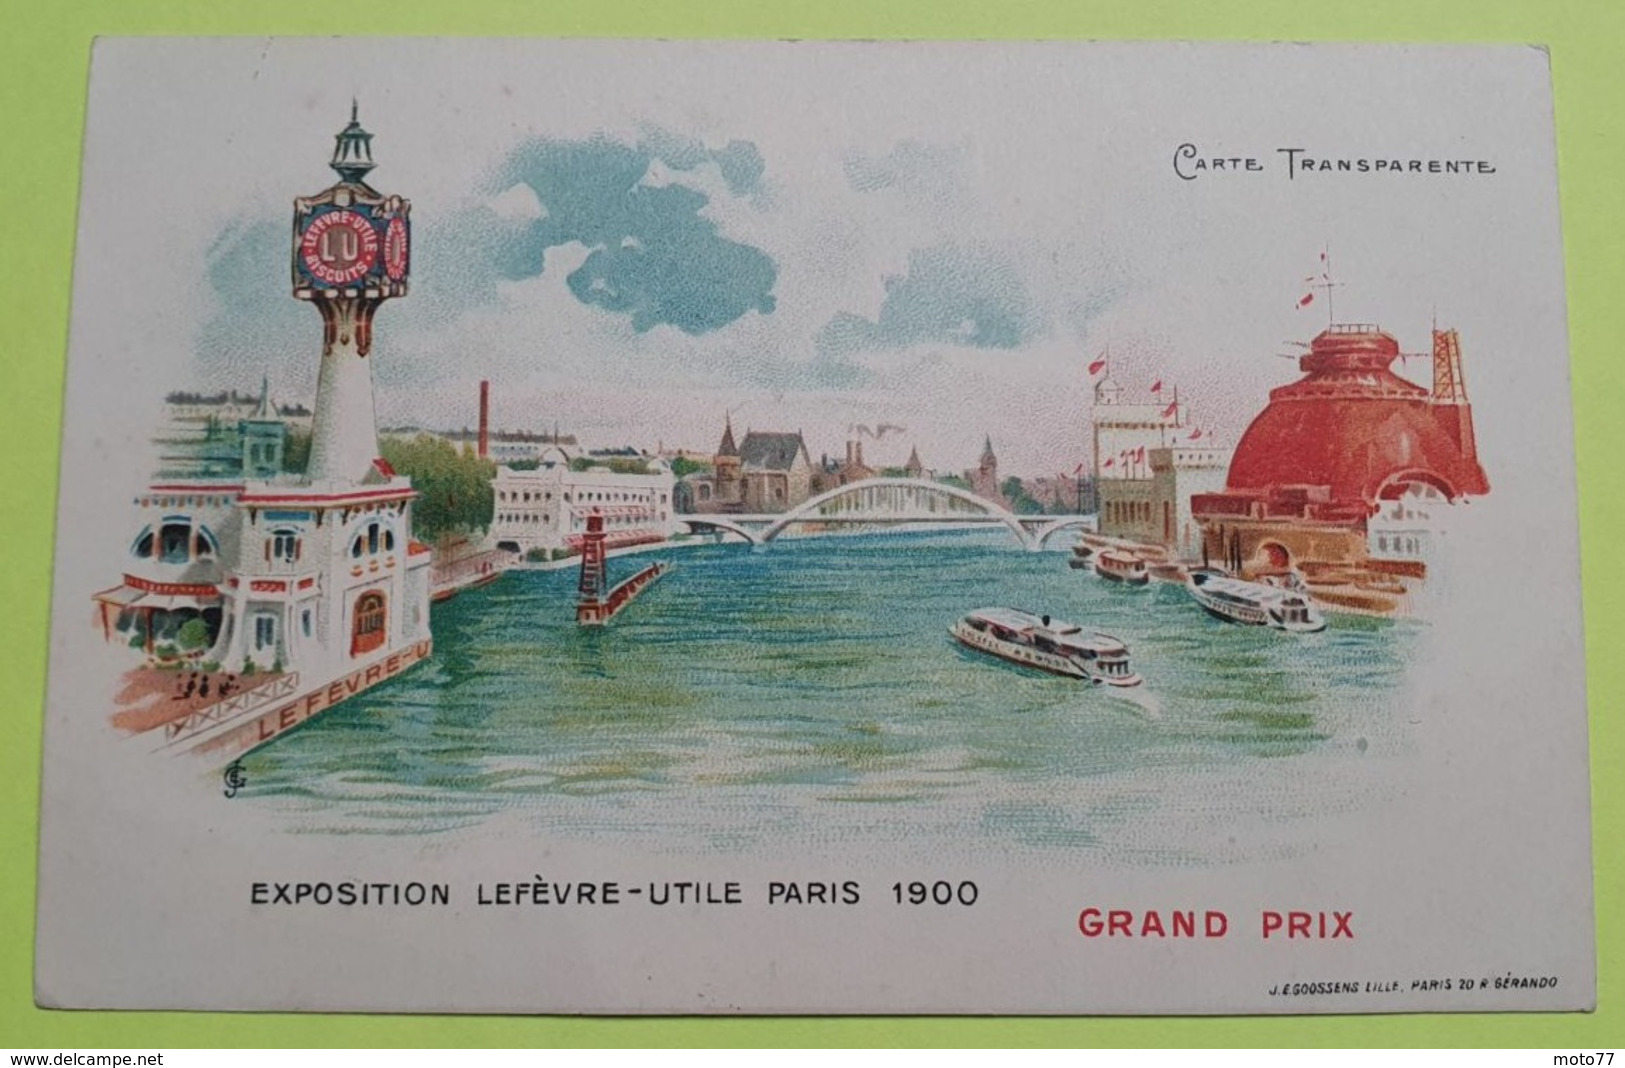 4 CPA cartes postales Chromo - PARIS "TRANSPARENTE" - Lefèvre Utile - vers 1900 - Biscuit LU /42